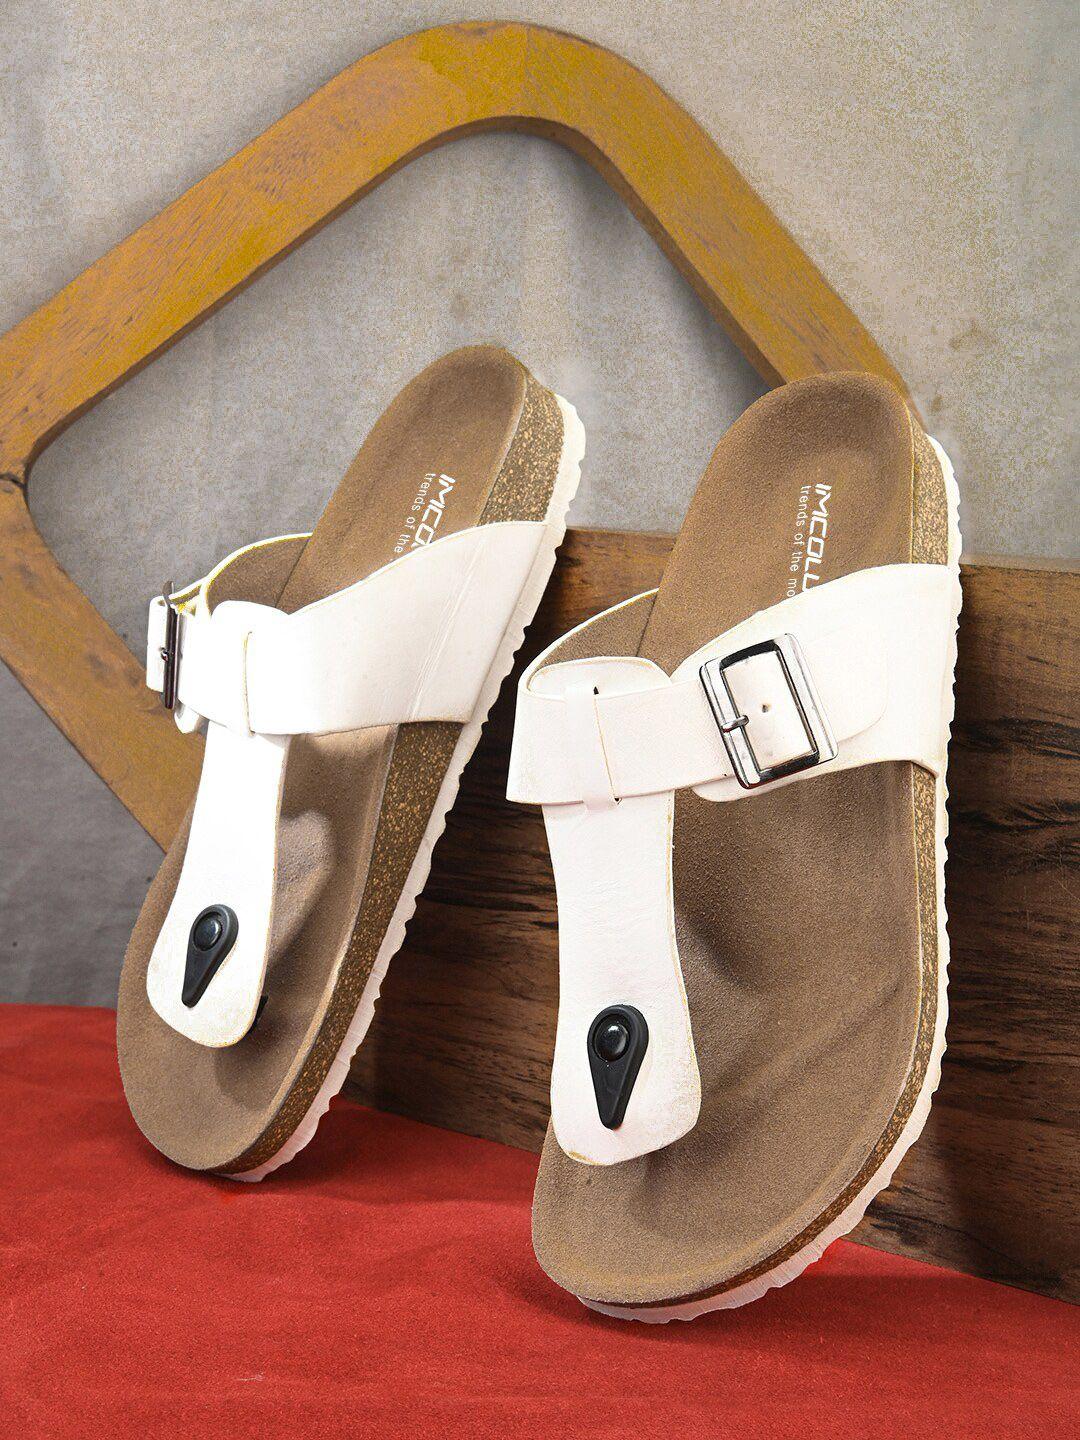 imcolus men open toe comfort sandals with buckle detail